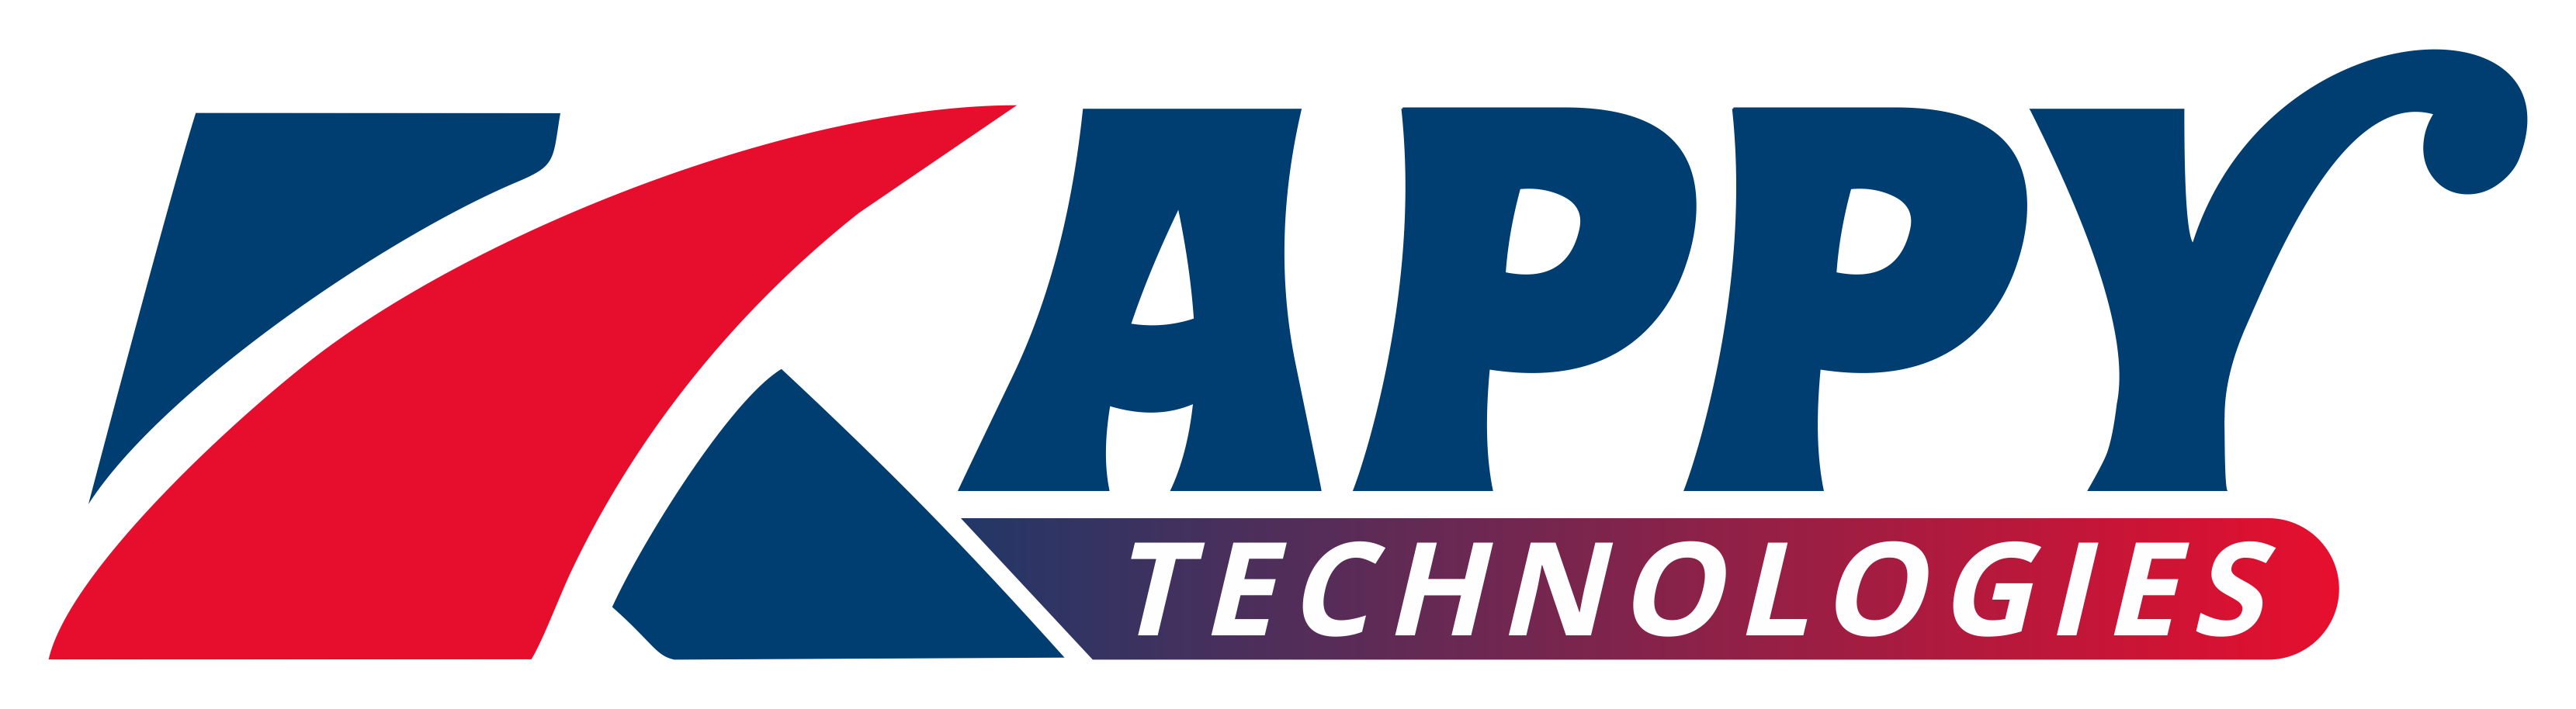 Kappy Technologies